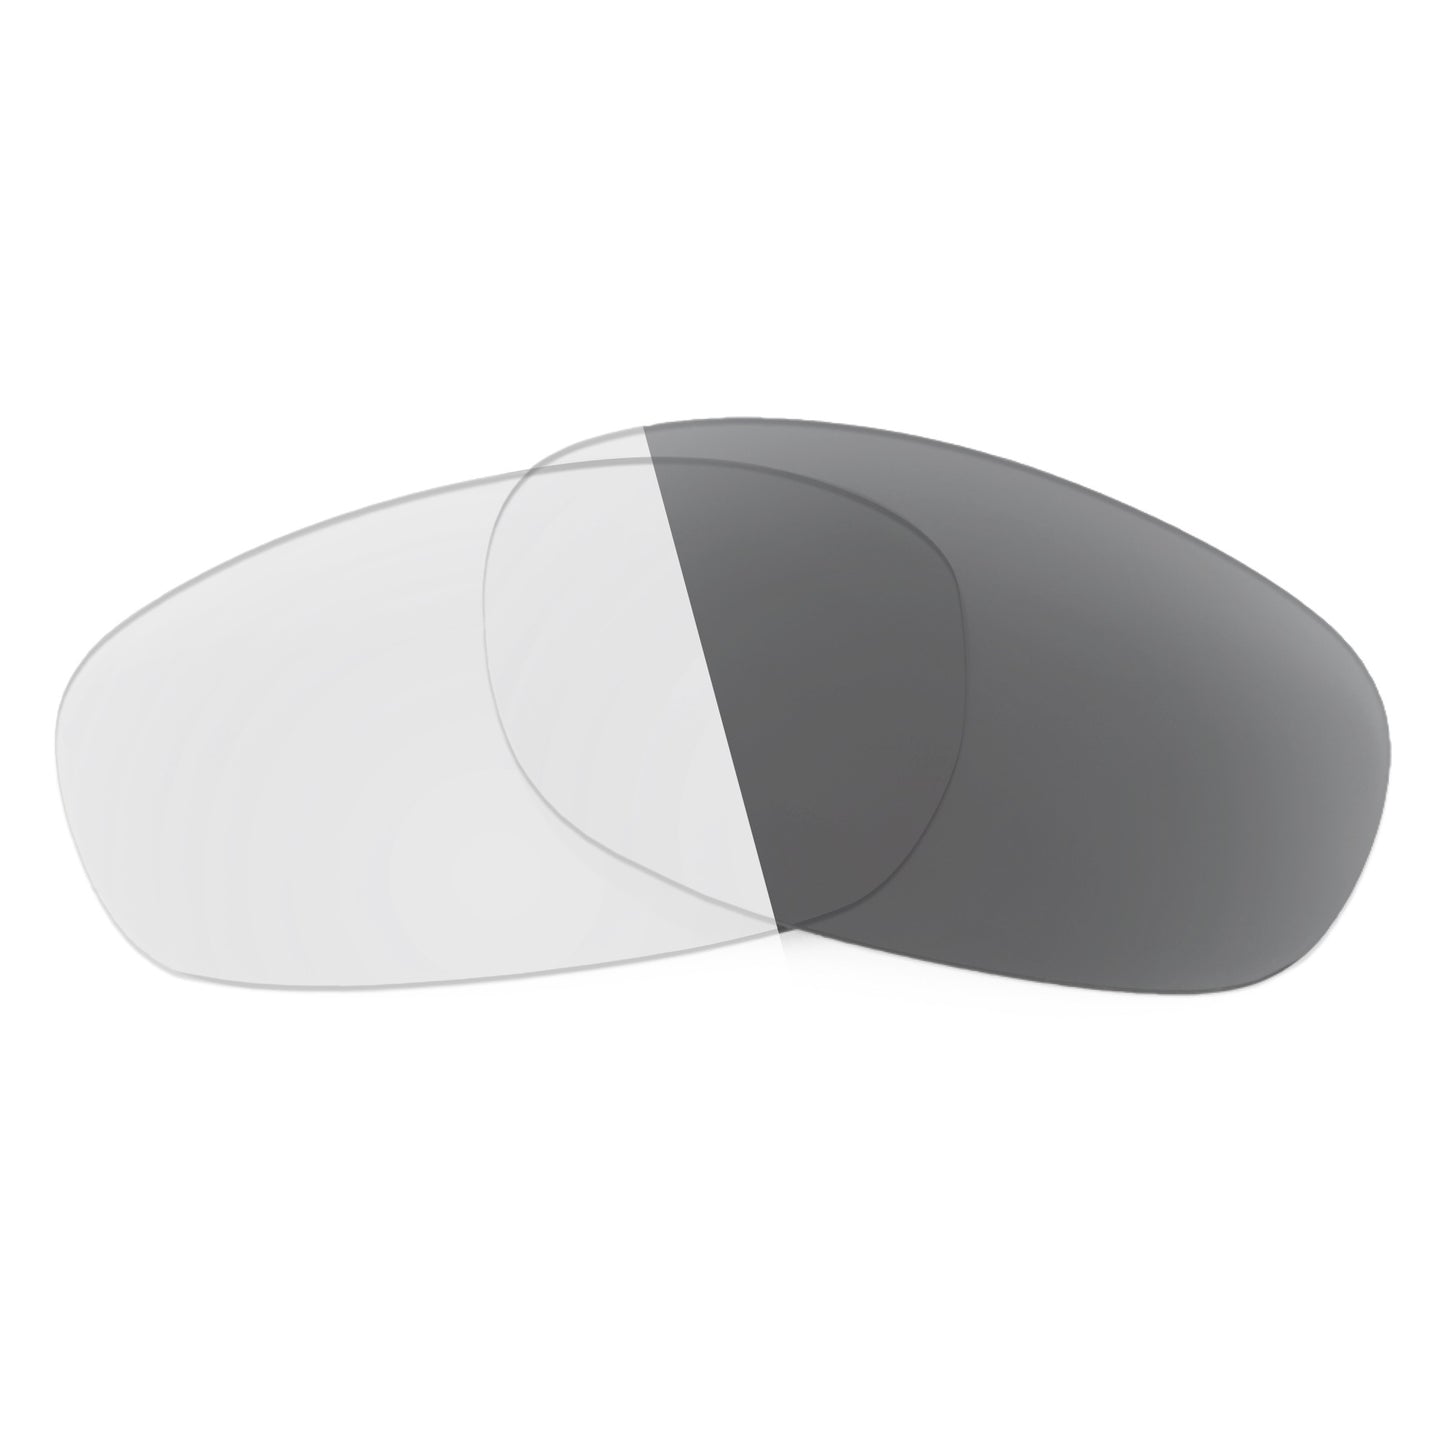 Revant replacement lenses for Costa Trevally Non-Polarized Adapt Gray Photochromic